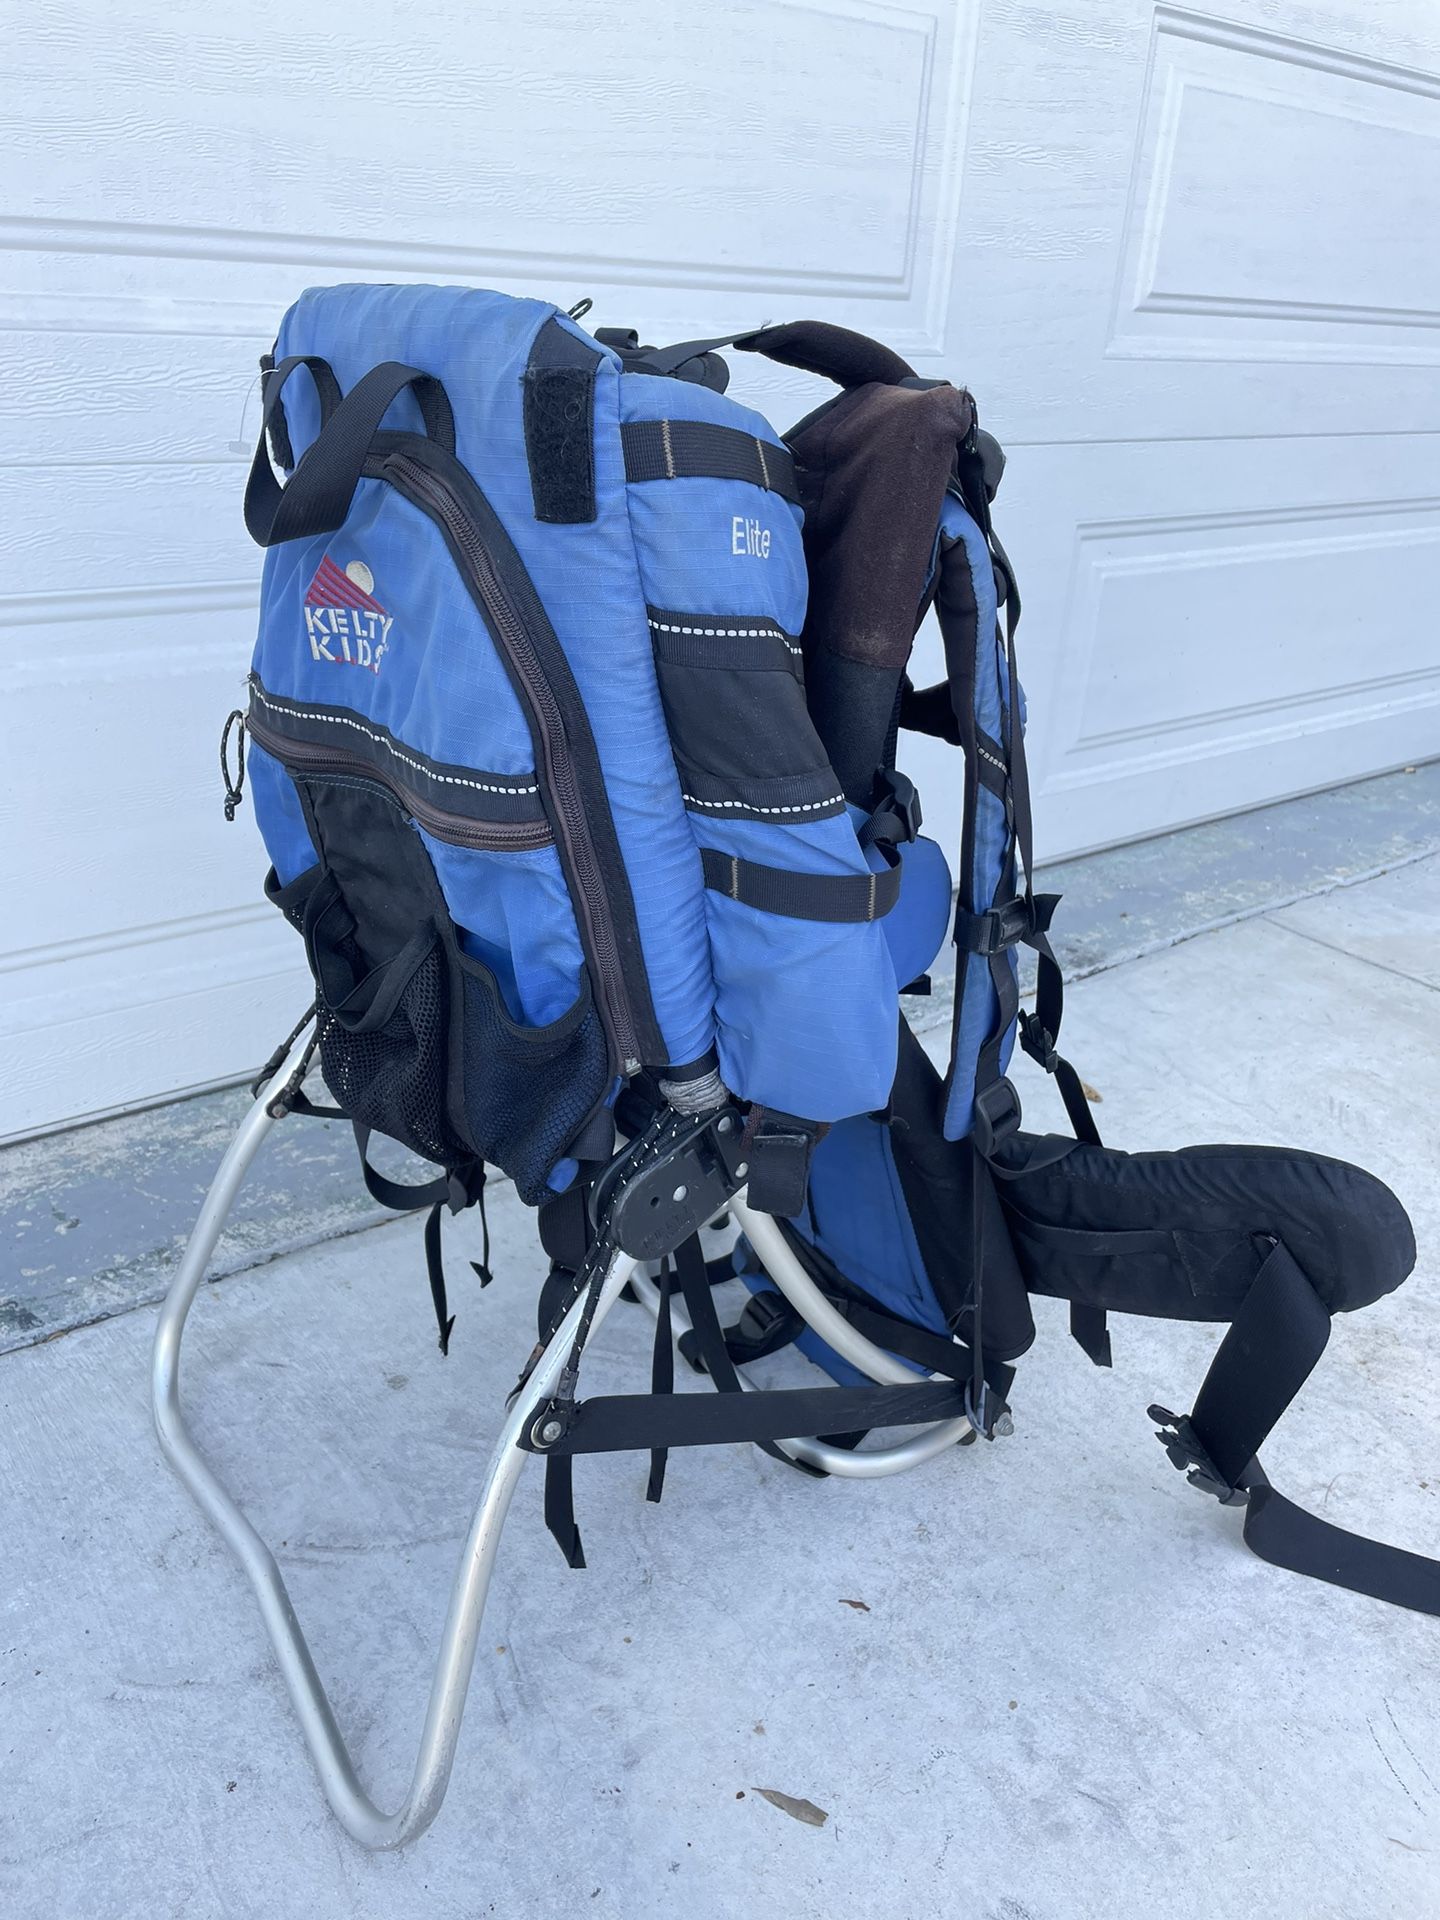 Kelty Kid / Baby Carrier Backpack